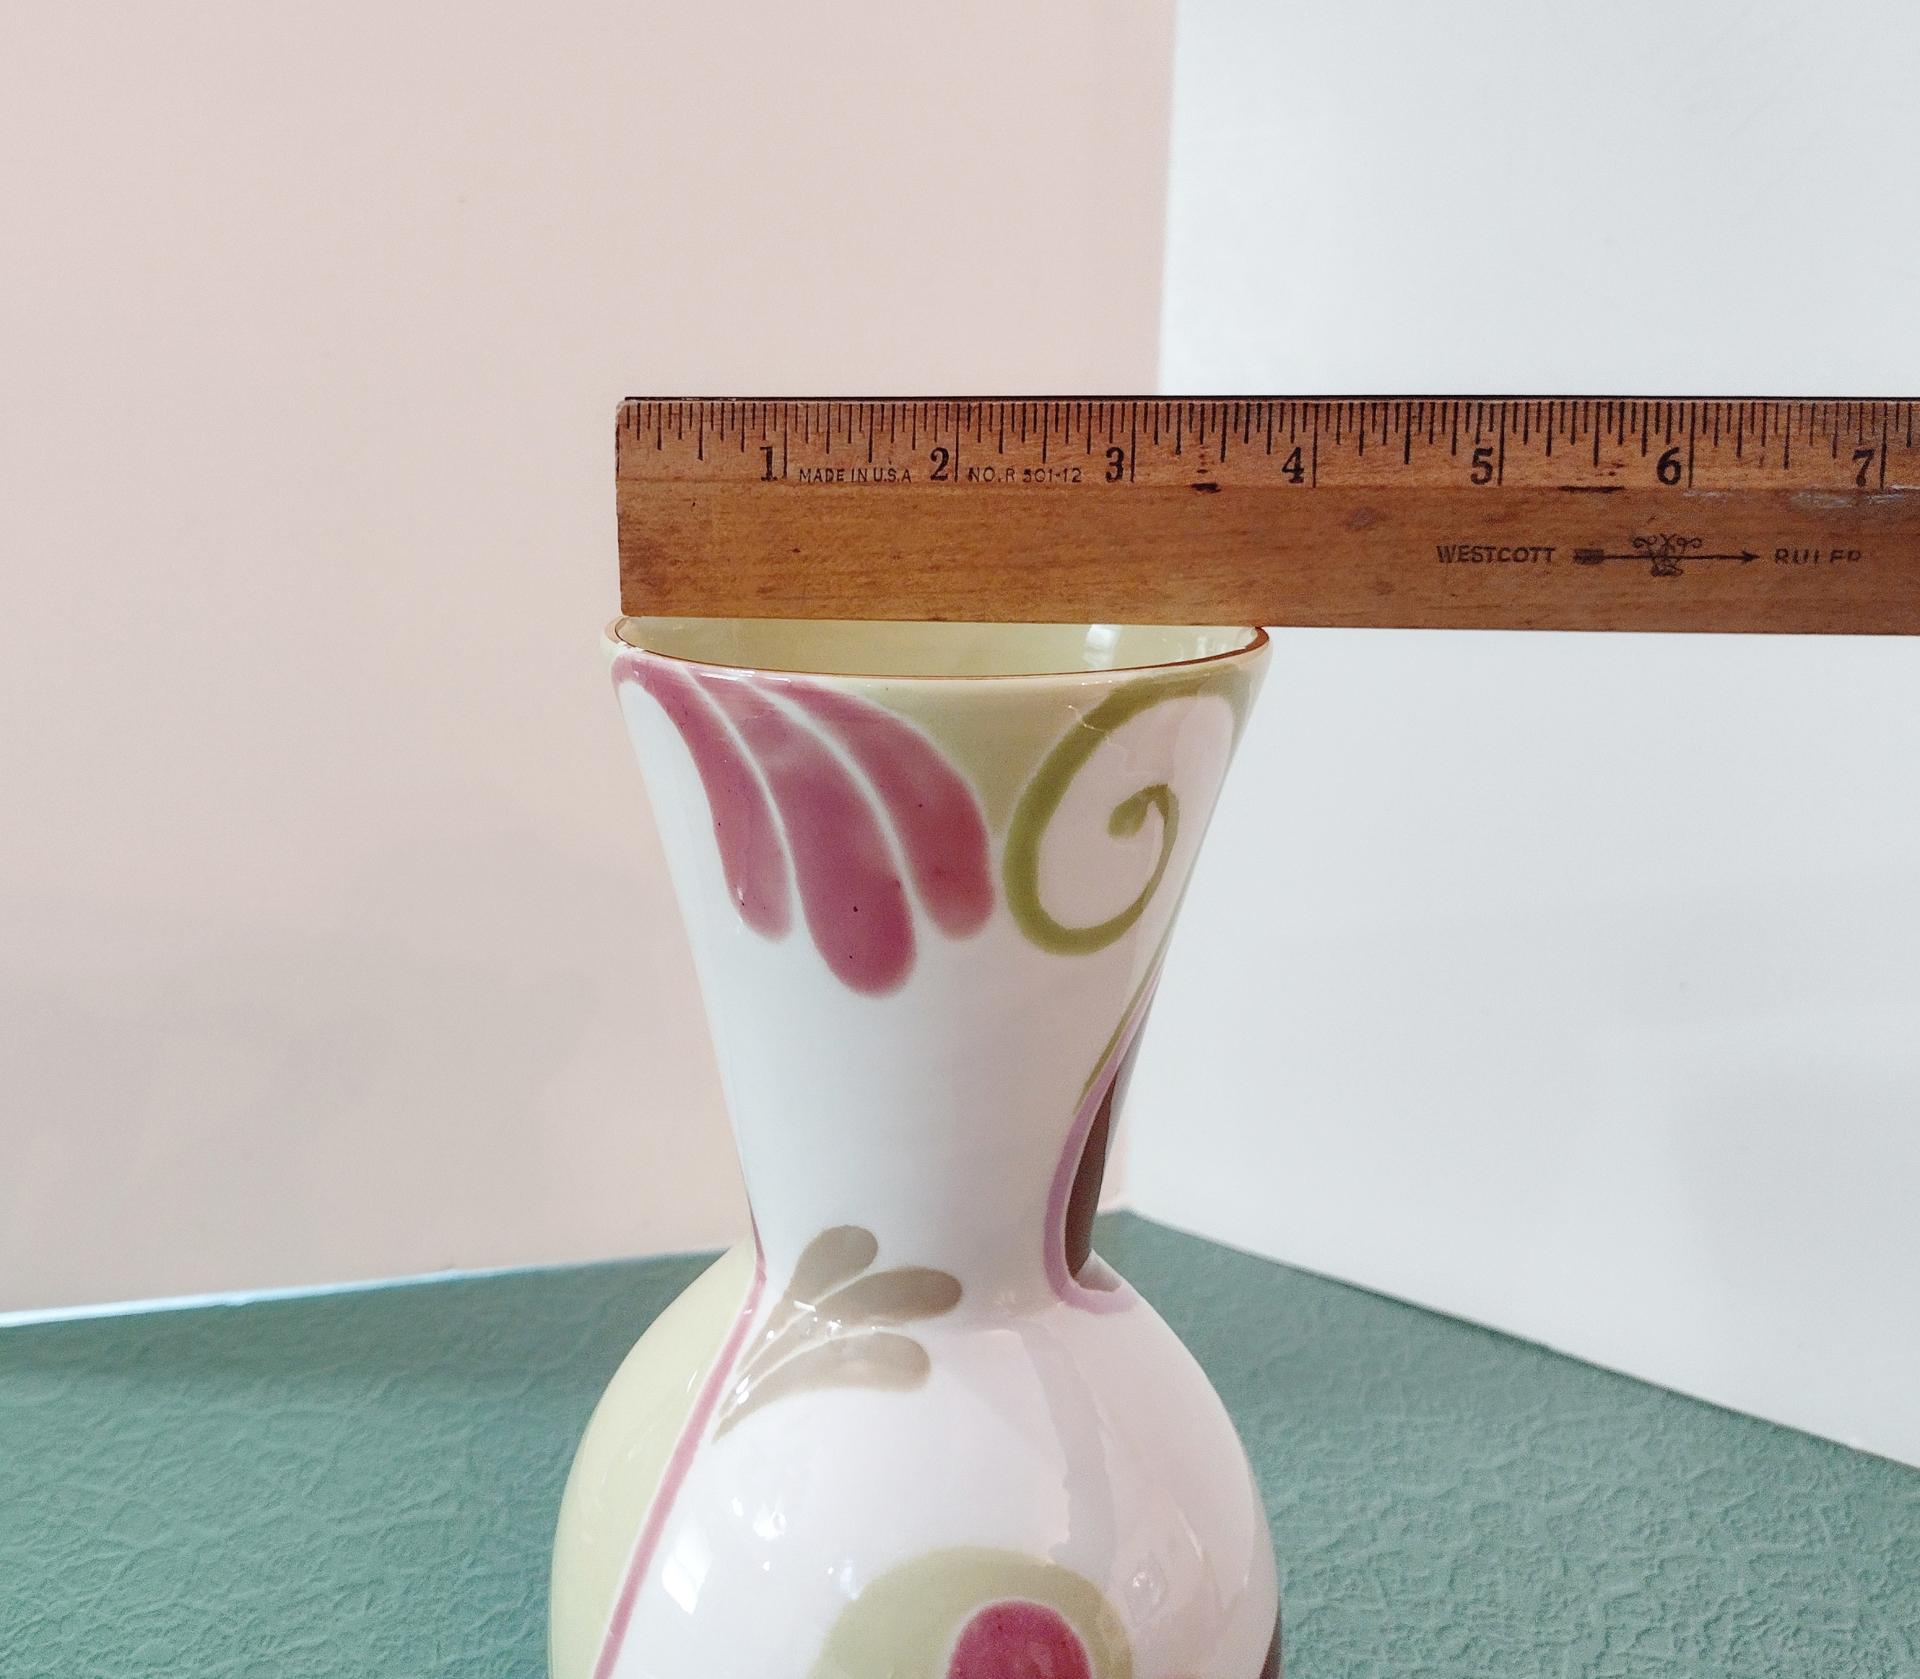 Jill Rosenwald Vintage Signed Ceramic Flower Vase